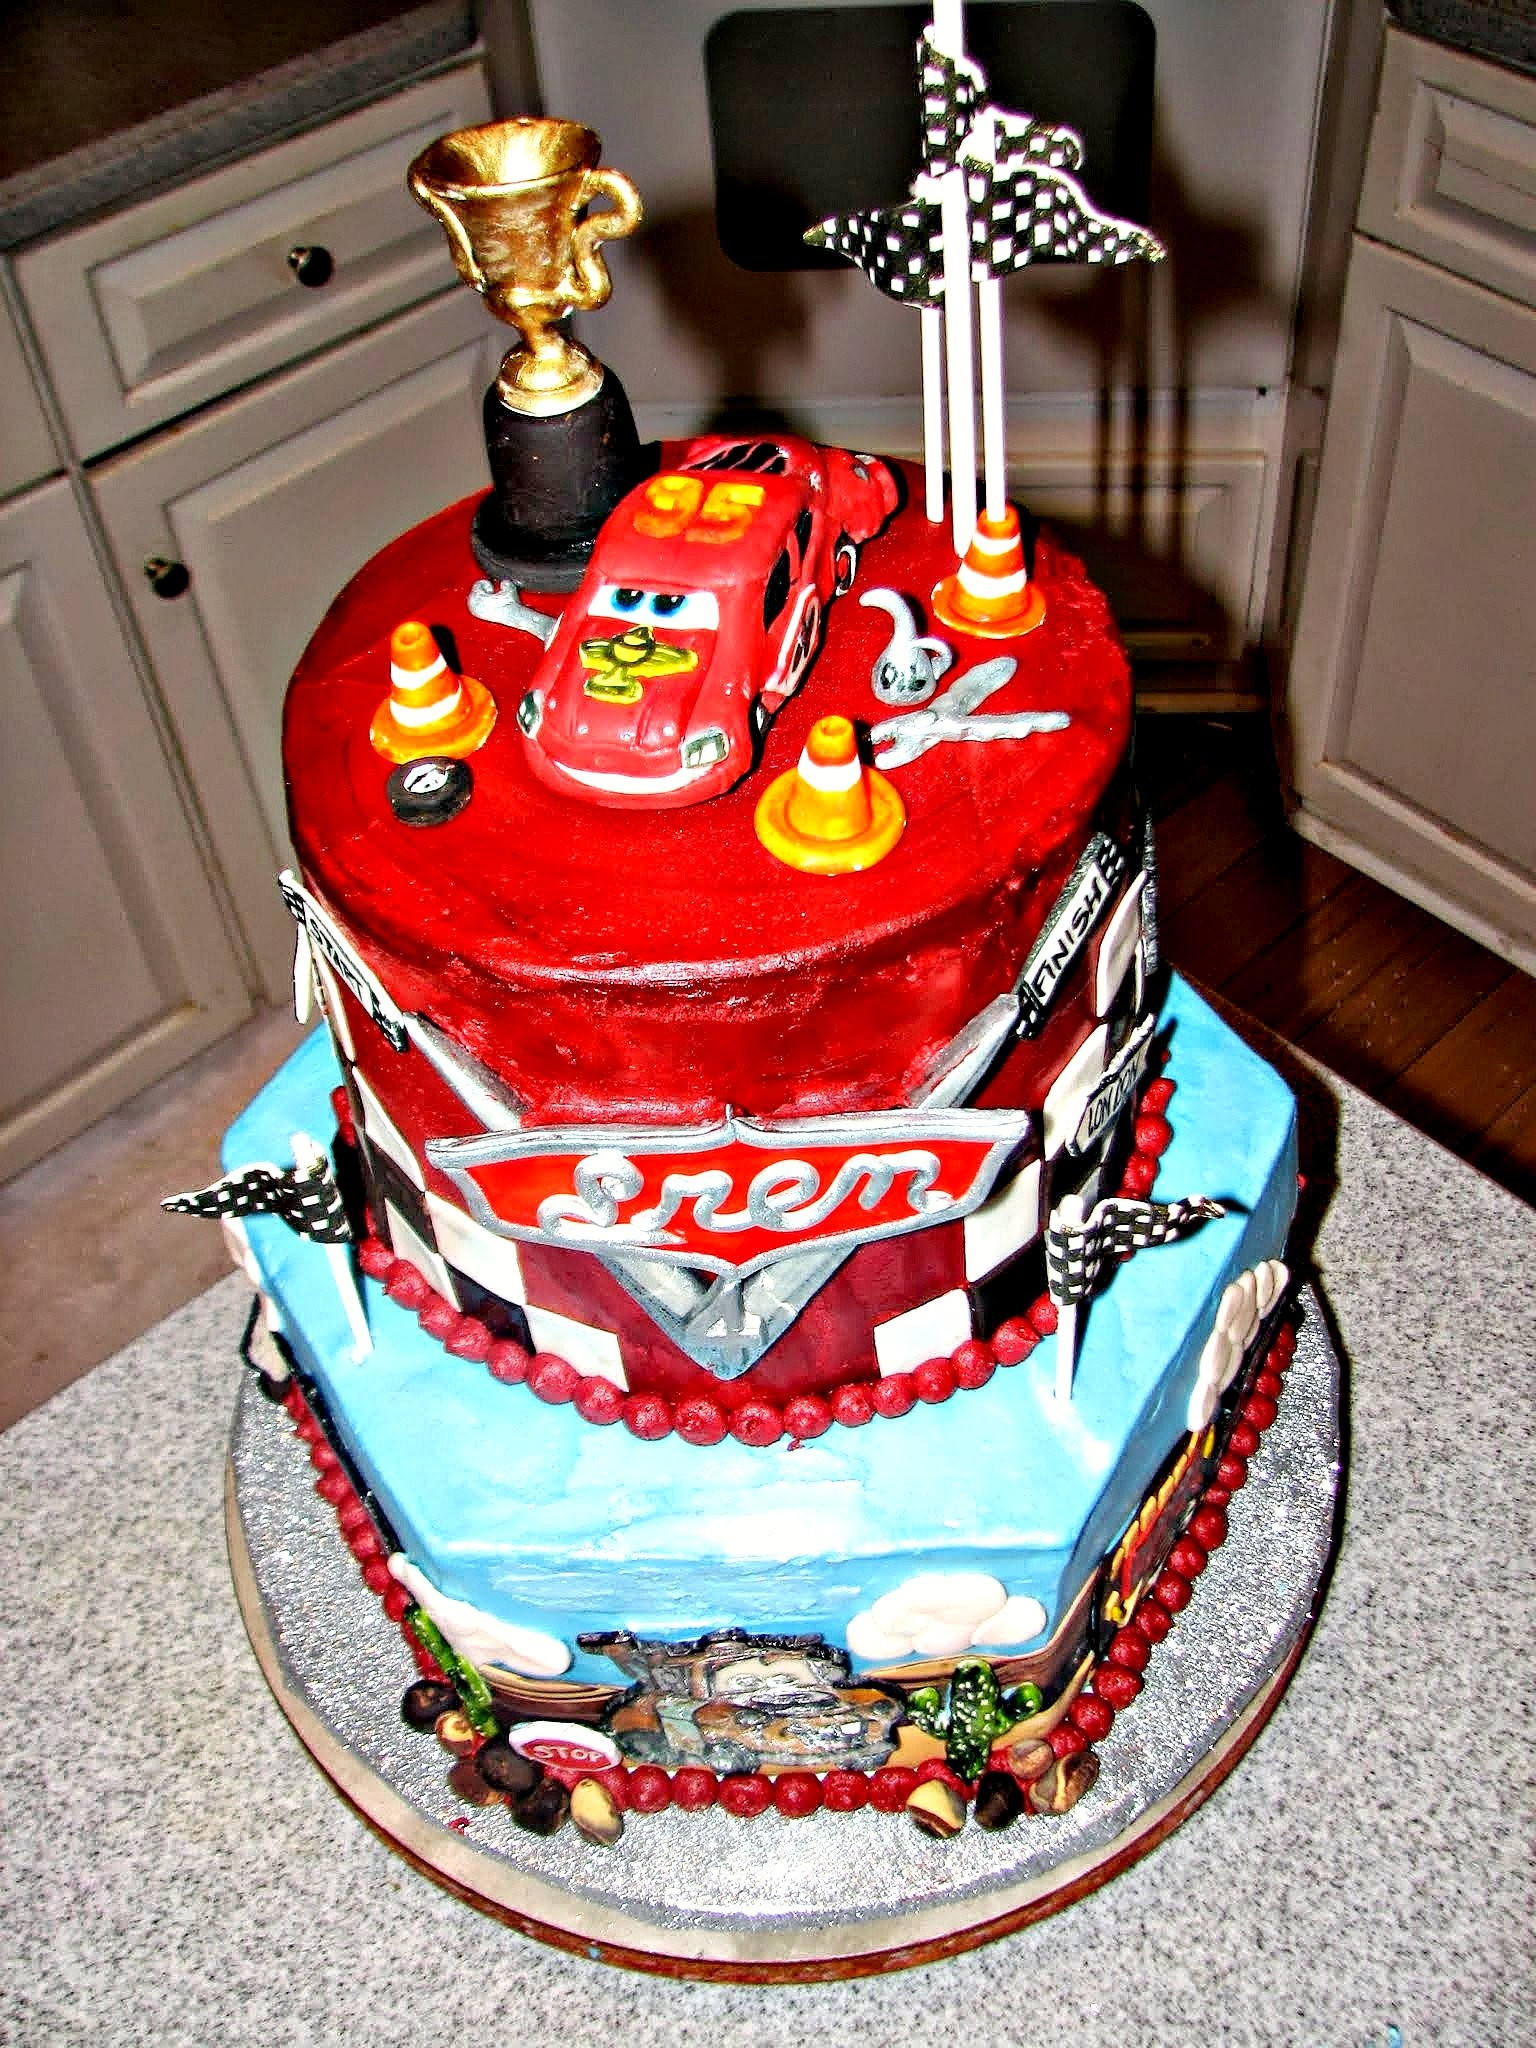 Disney Cars Birthday Cake
 Disney Cars 2 4Th Birthday Cake The Top Tier Was